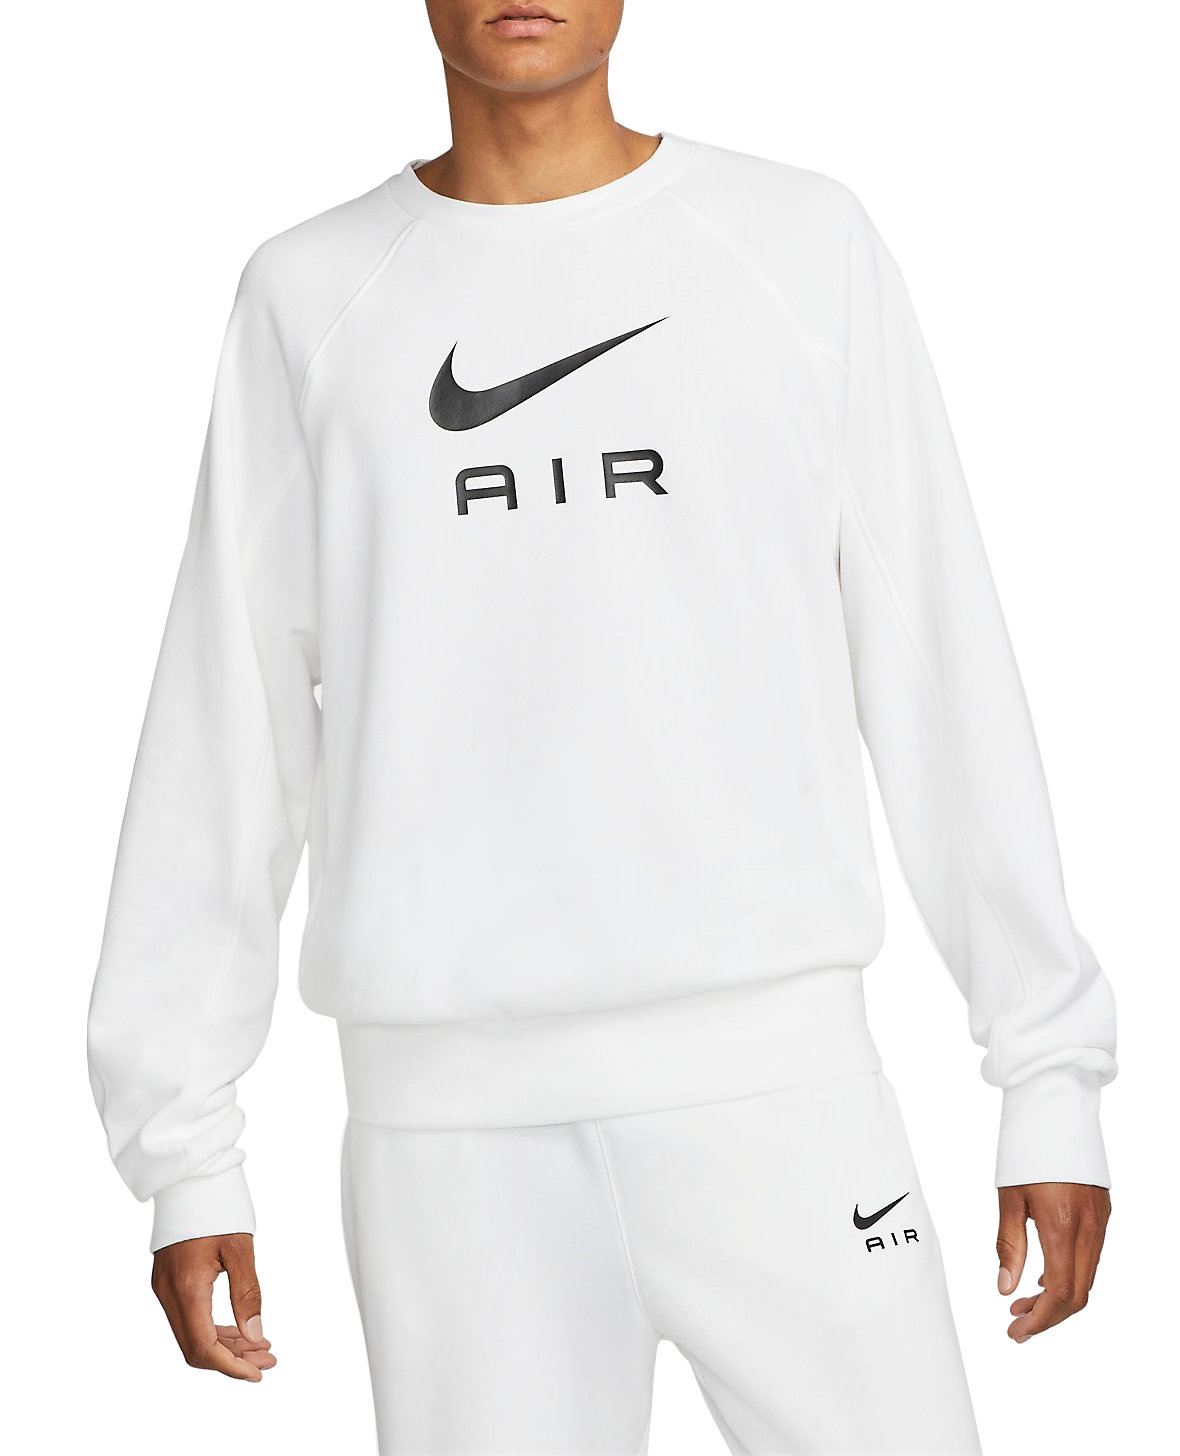 Mikica Nike Air FT Crew Sweatshirt